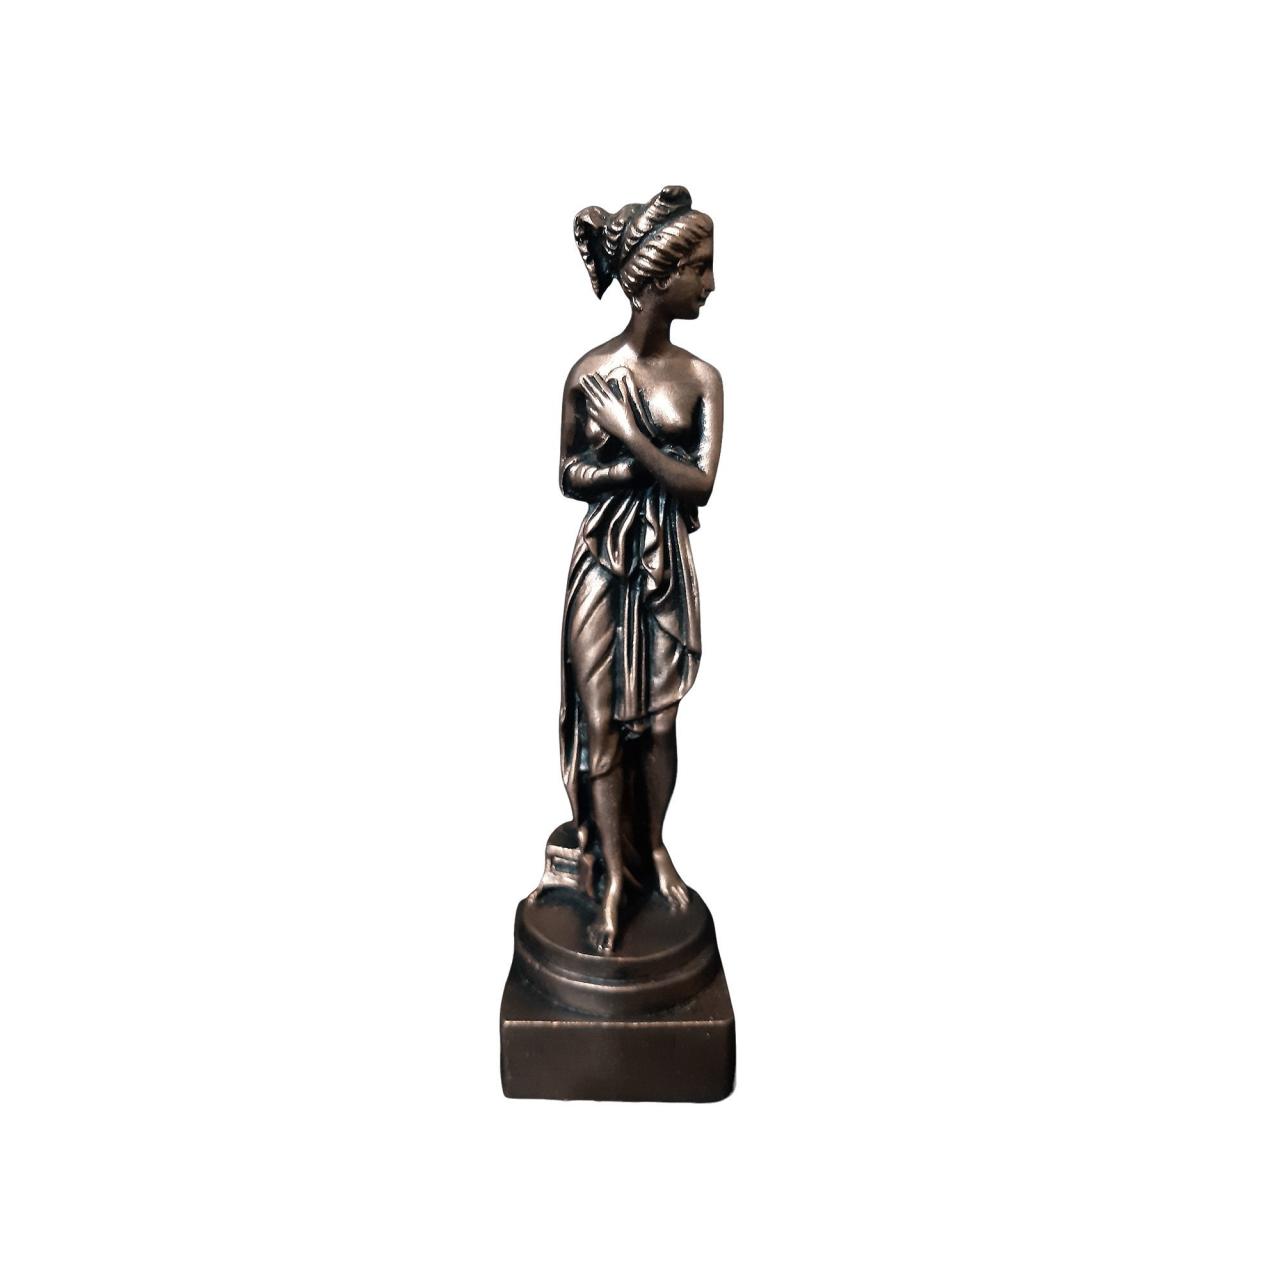 Persephone Greek Goddess Sculpture - The Dancer By Antonio Canova Replica - Handmade Alabaster Statue 15cm